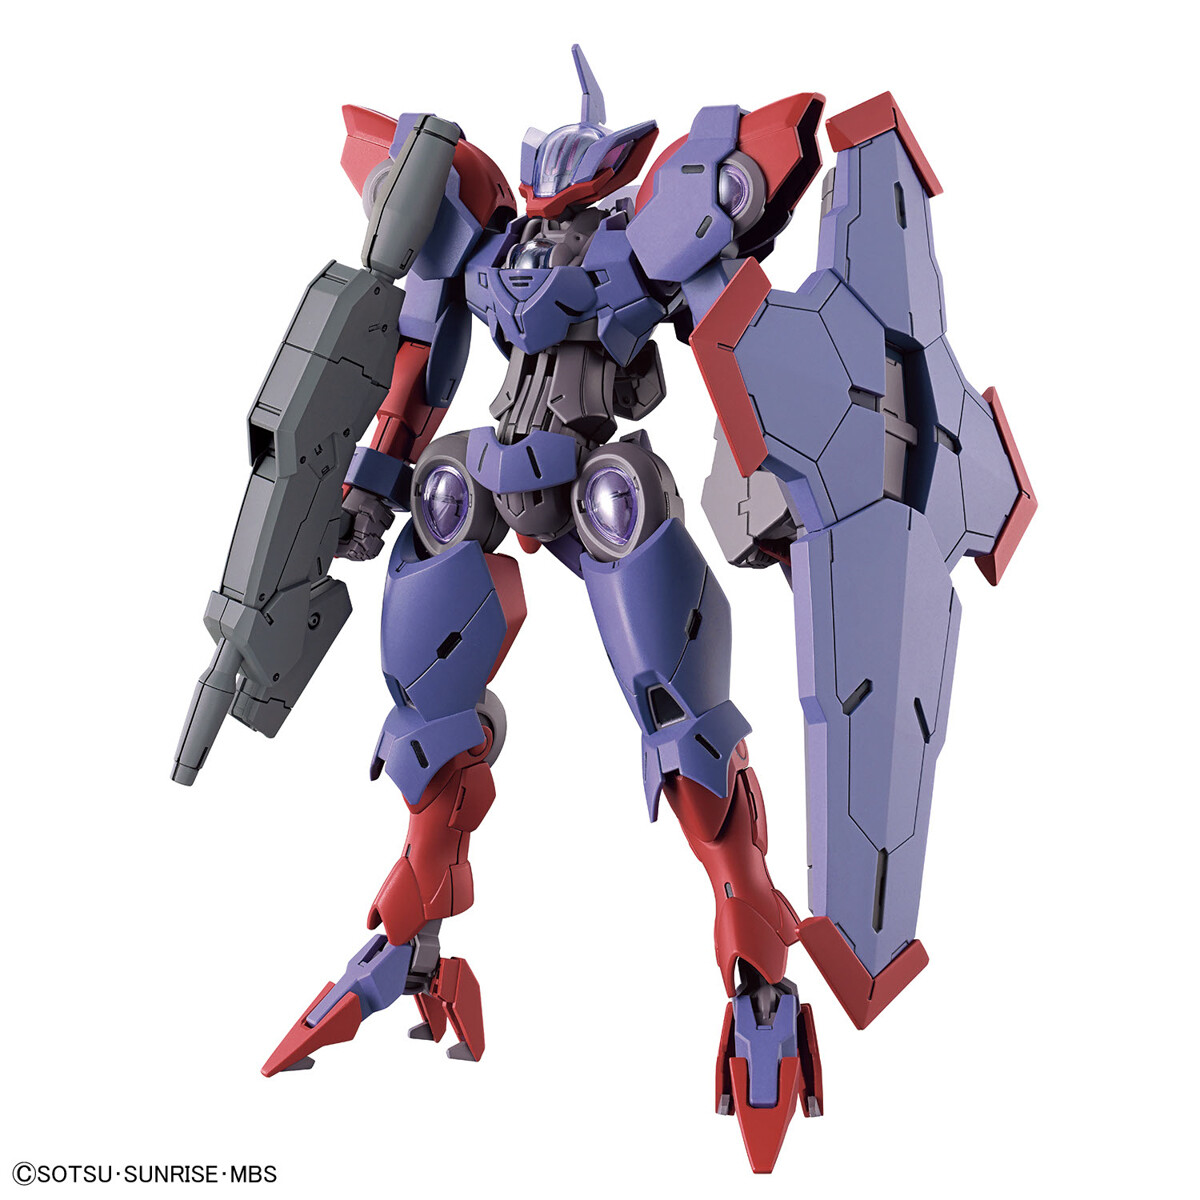 Bandai Hobby - Maquette Gundam - 05 Gundam Age-1 Titus Gunpla HG 1/144 13cm  - 4573102573841